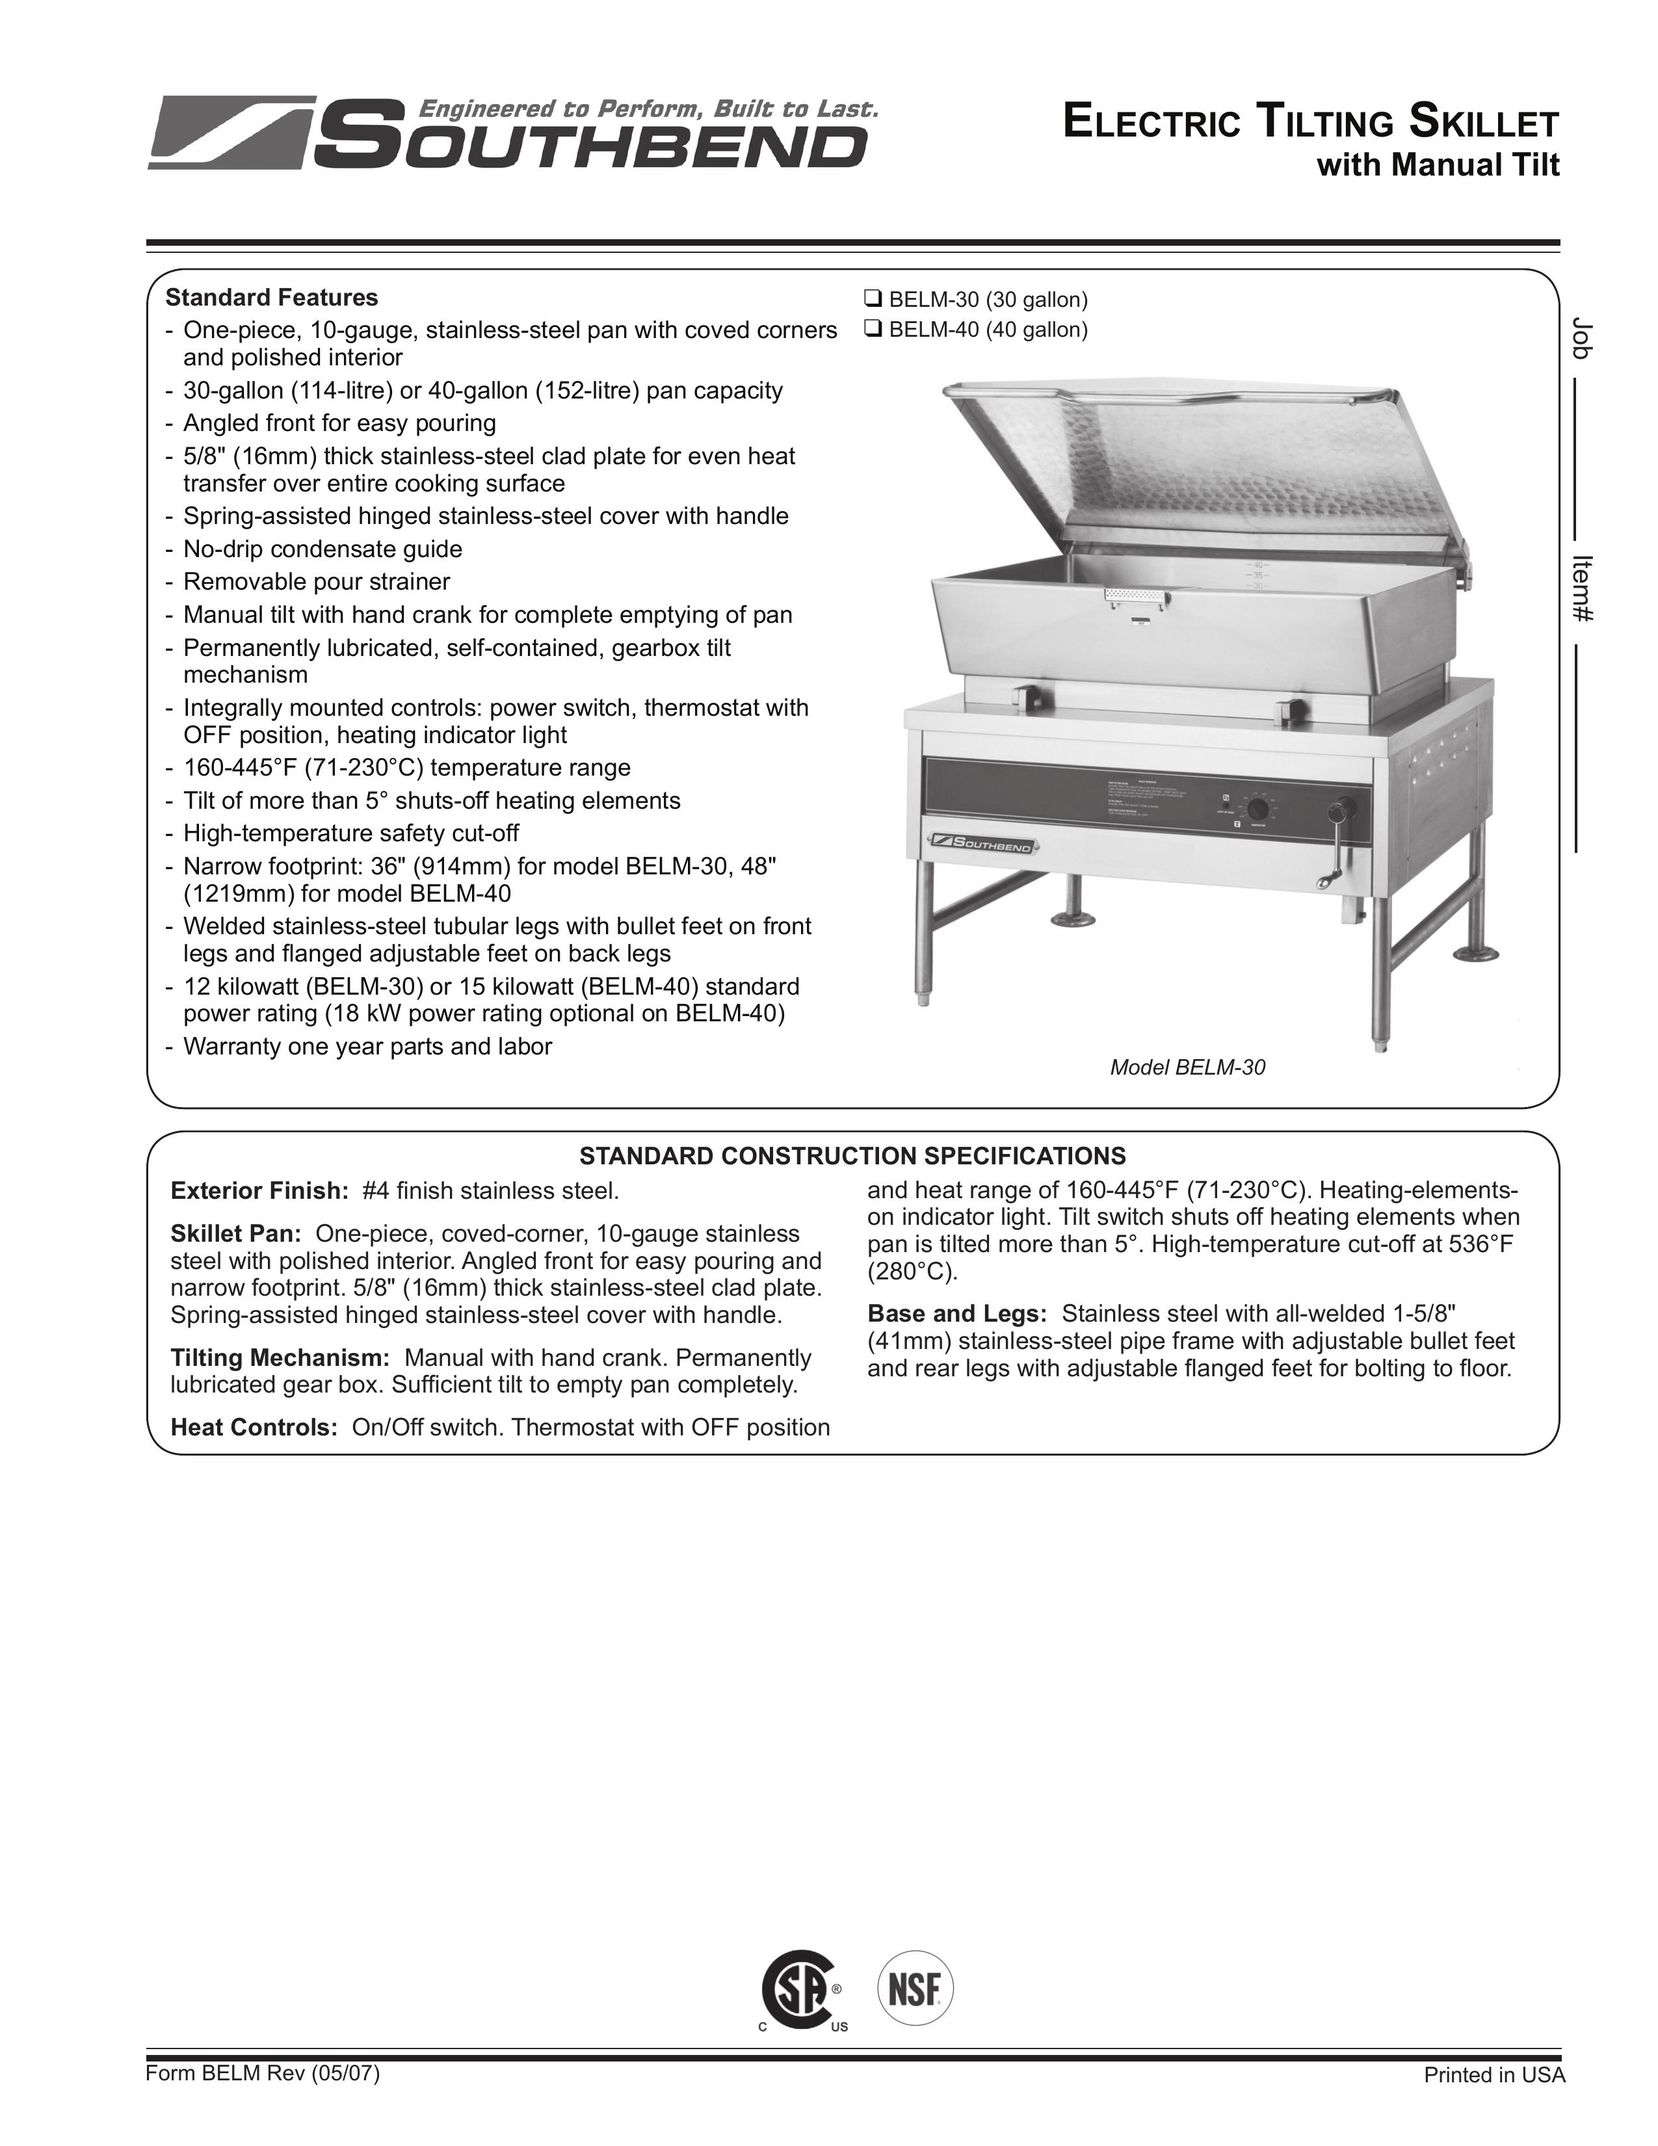 Southbend BELM-40 Fryer User Manual